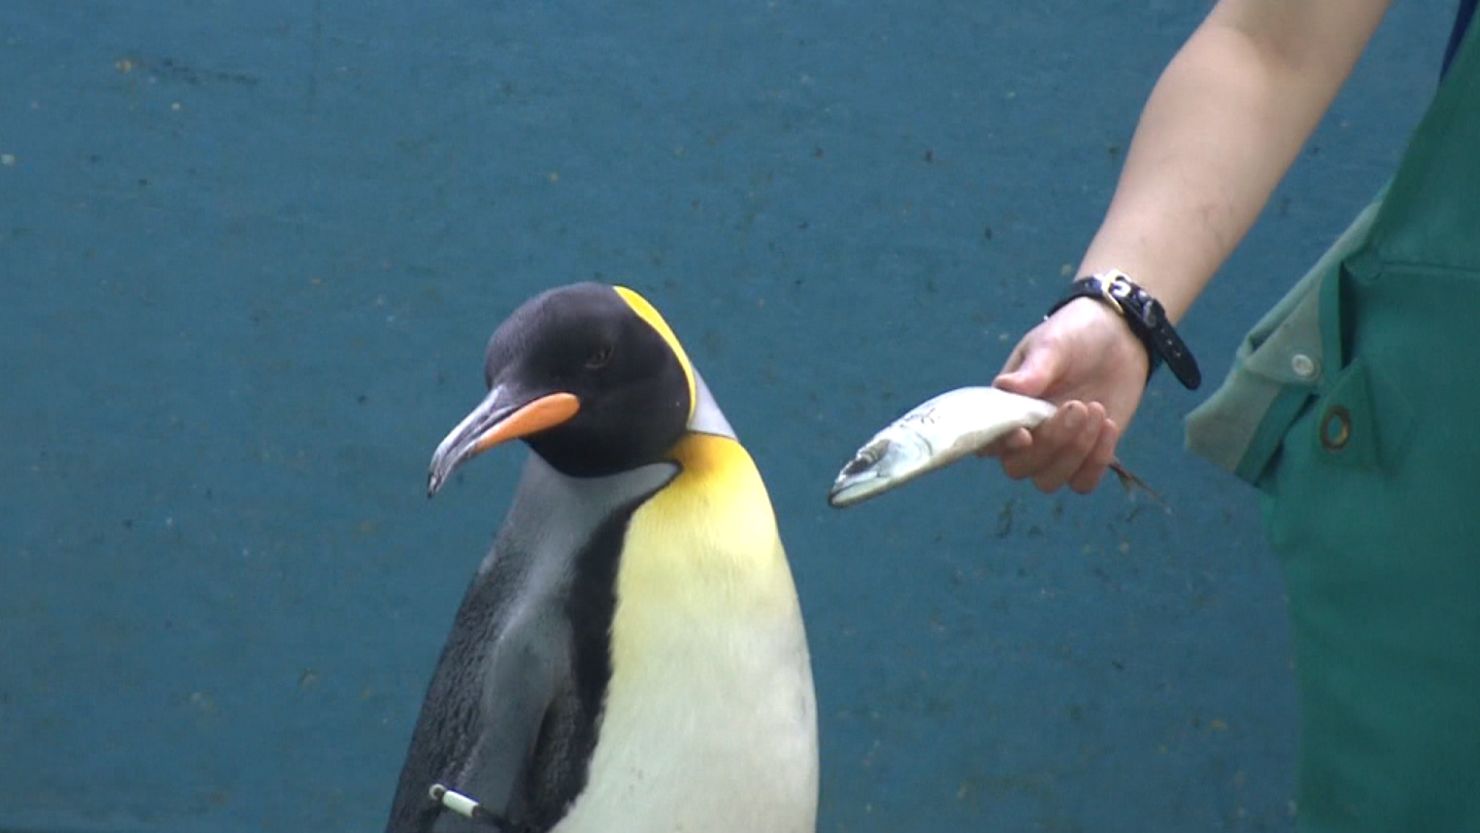 An employee at Japan's Hakone-en Aquarium waves a mackerel near a penguin, who turns away.